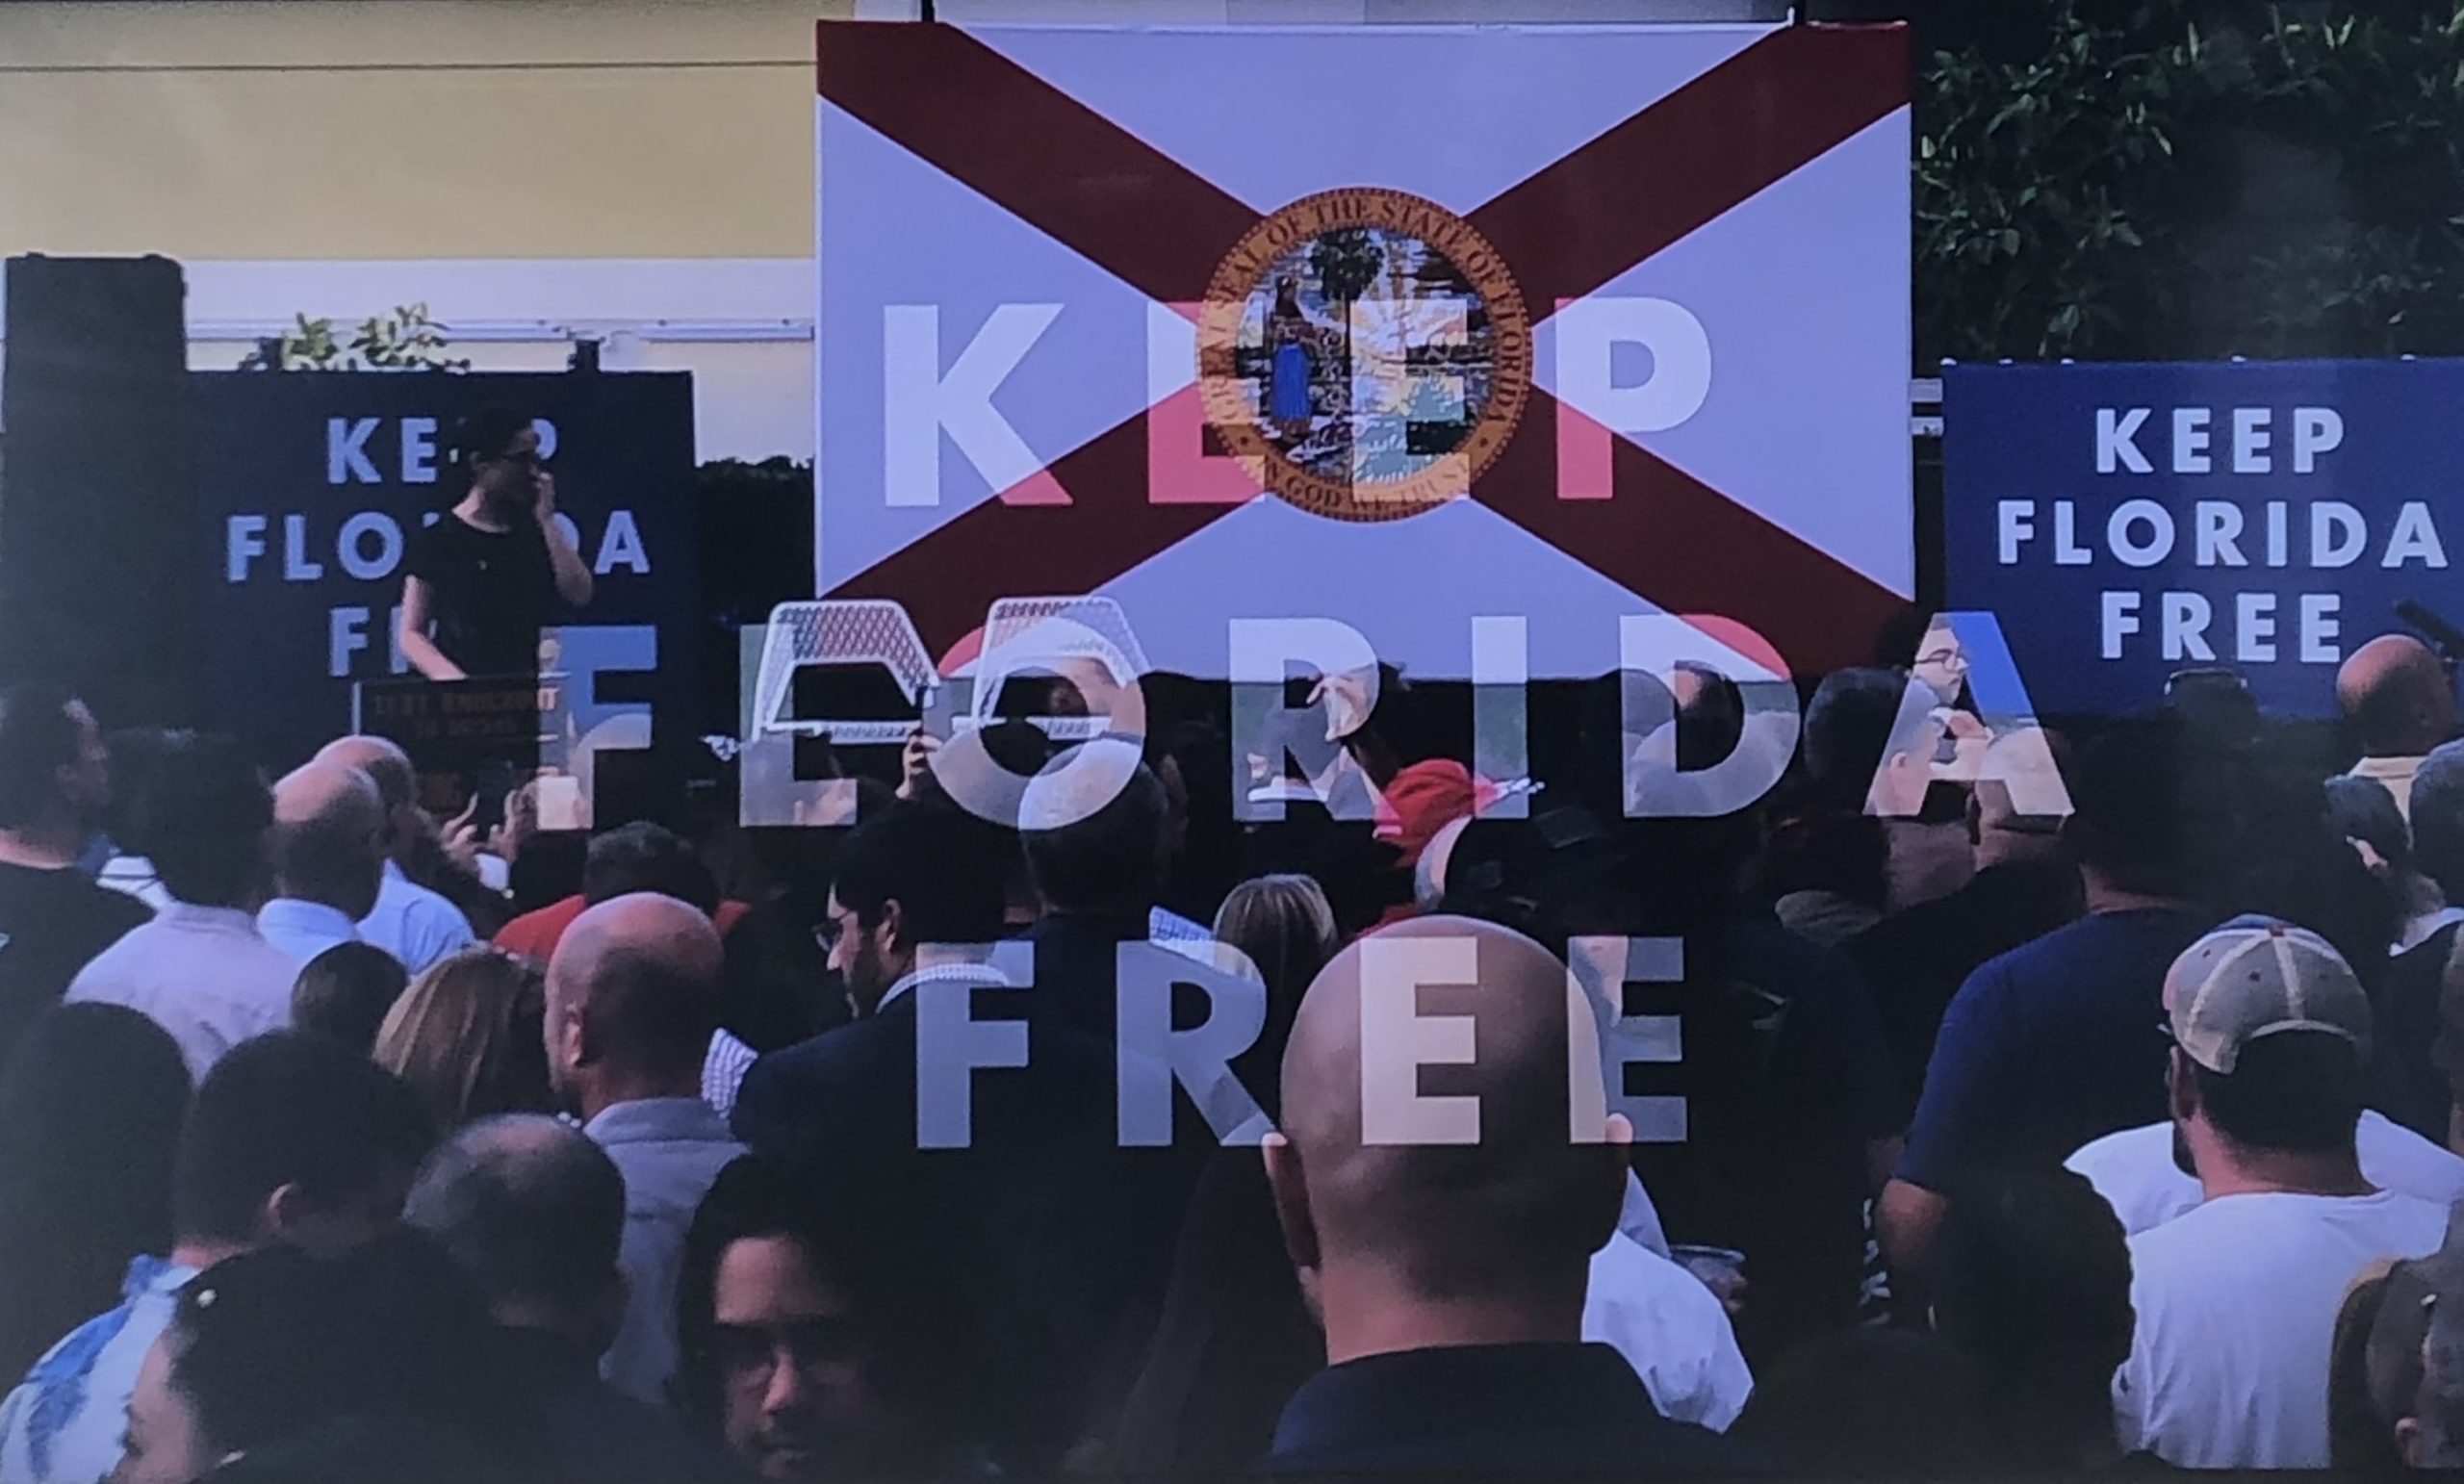 VIDEO: Ron DeSantis 'Keep Florida Free' Rally Speech 3/30/2022 - Meet A Future President